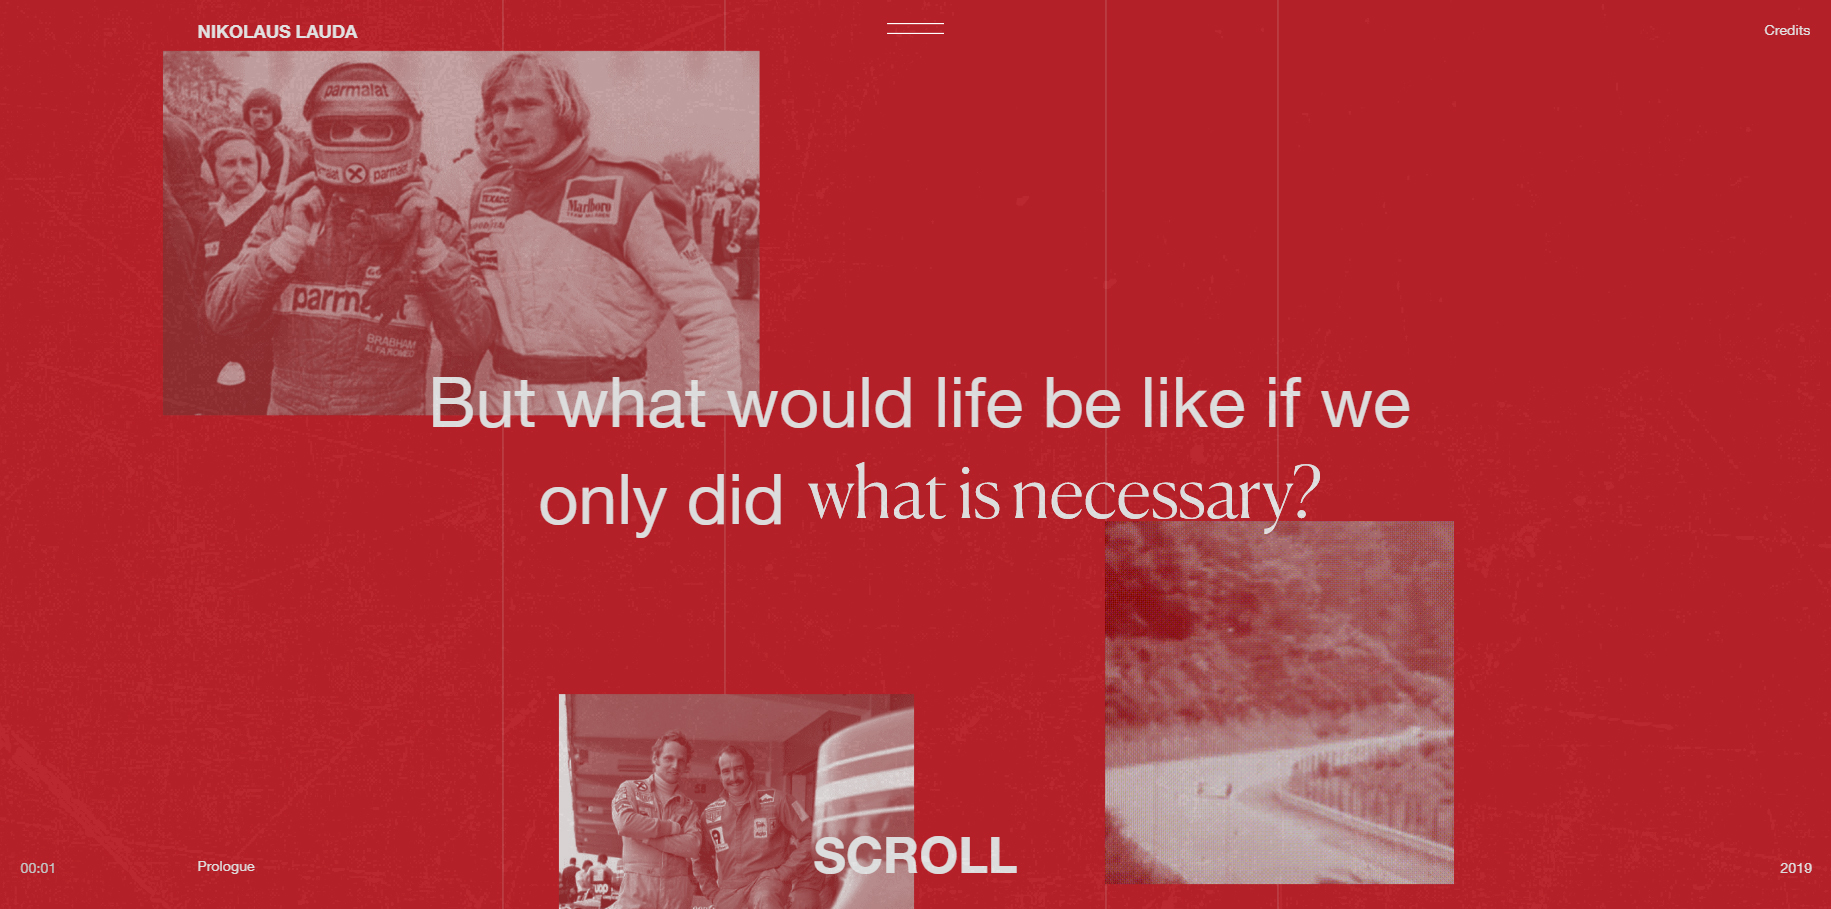 Niki Lauda - Website of the Day